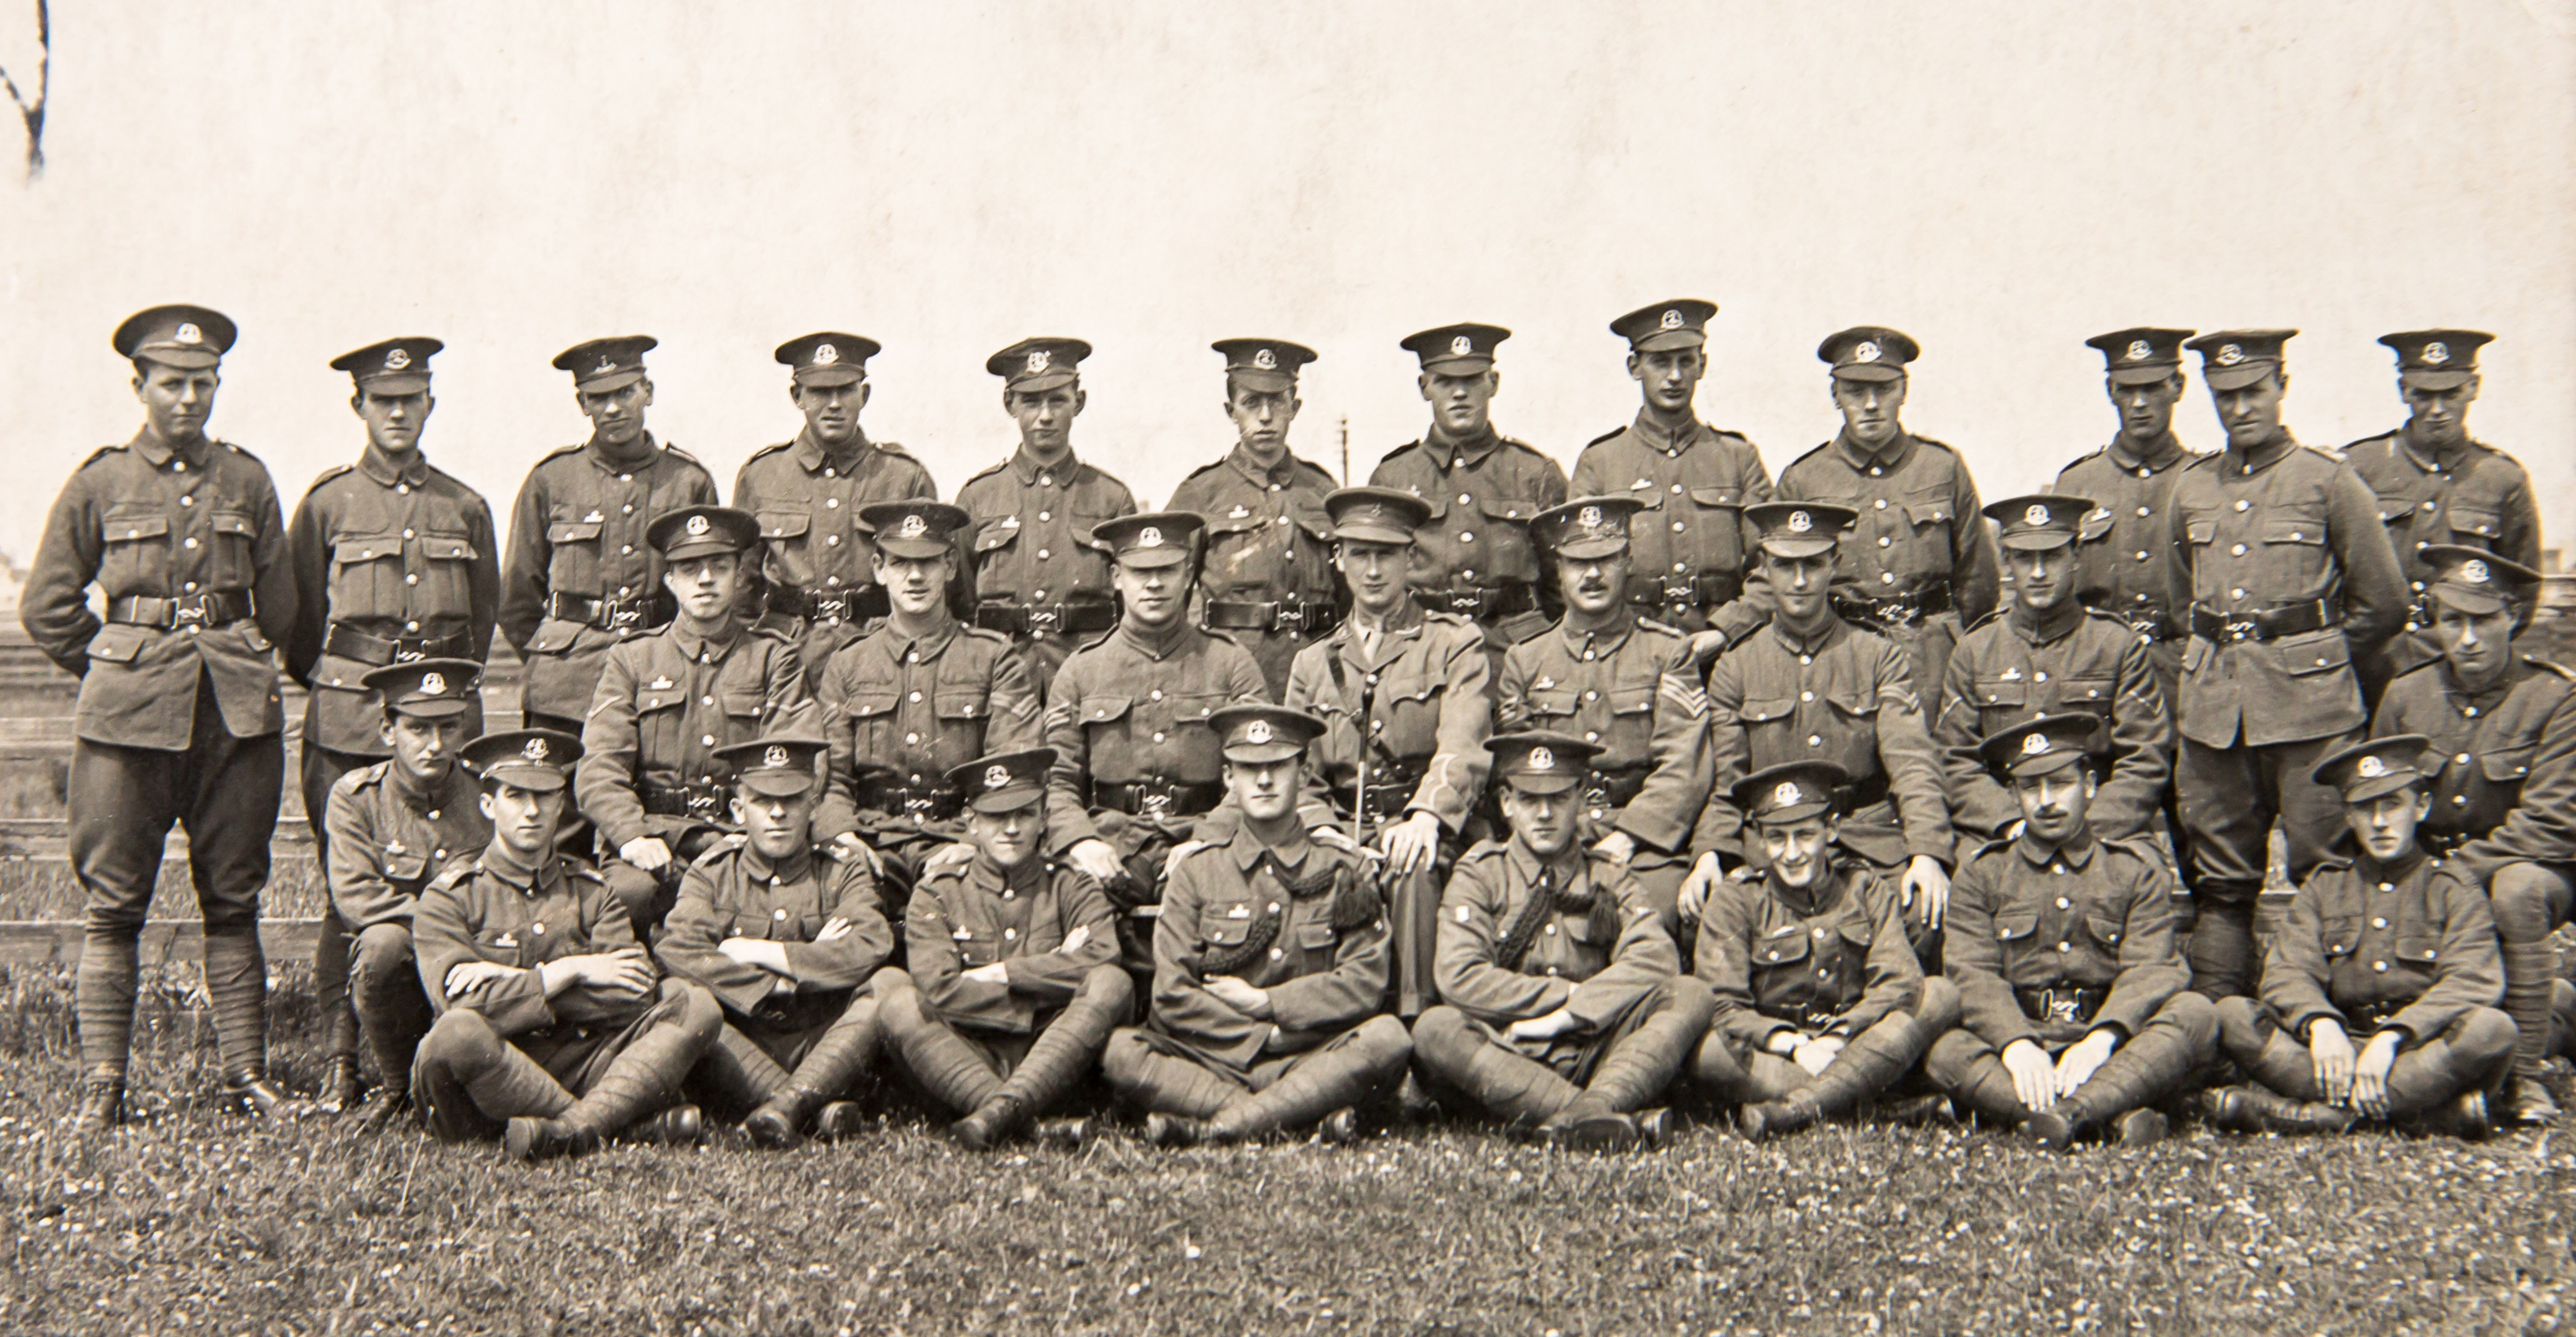 British regiment group photo 1940th. English vintage photo